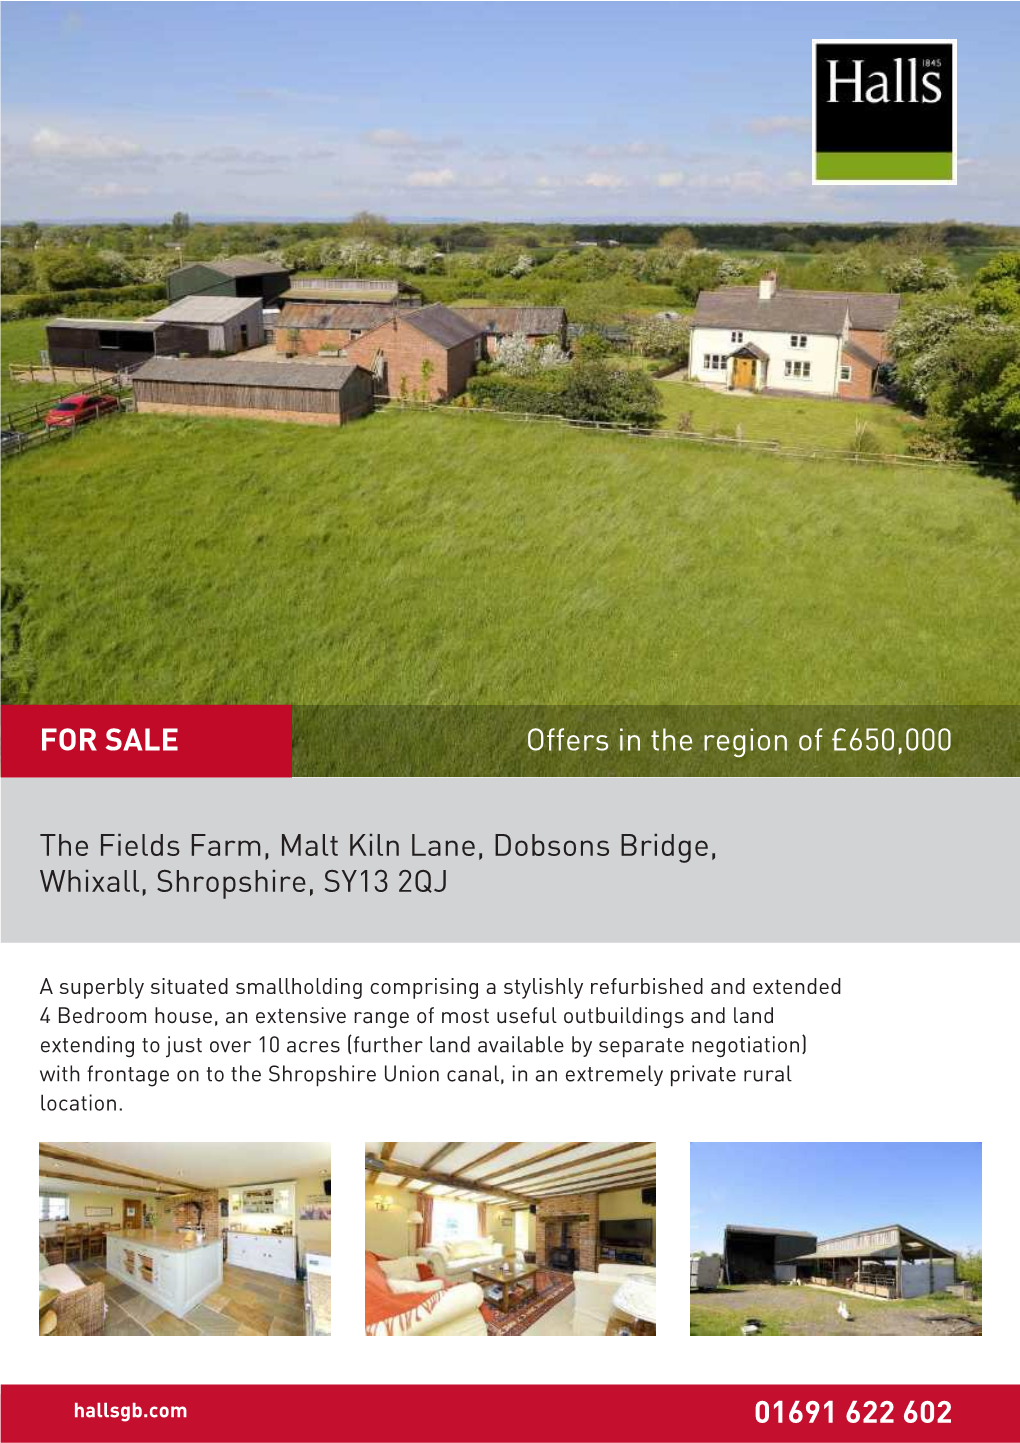 The Fields Farm, Malt Kiln Lane, Dobsons Bridge, Whixall, Shropshire, SY13 2QJ